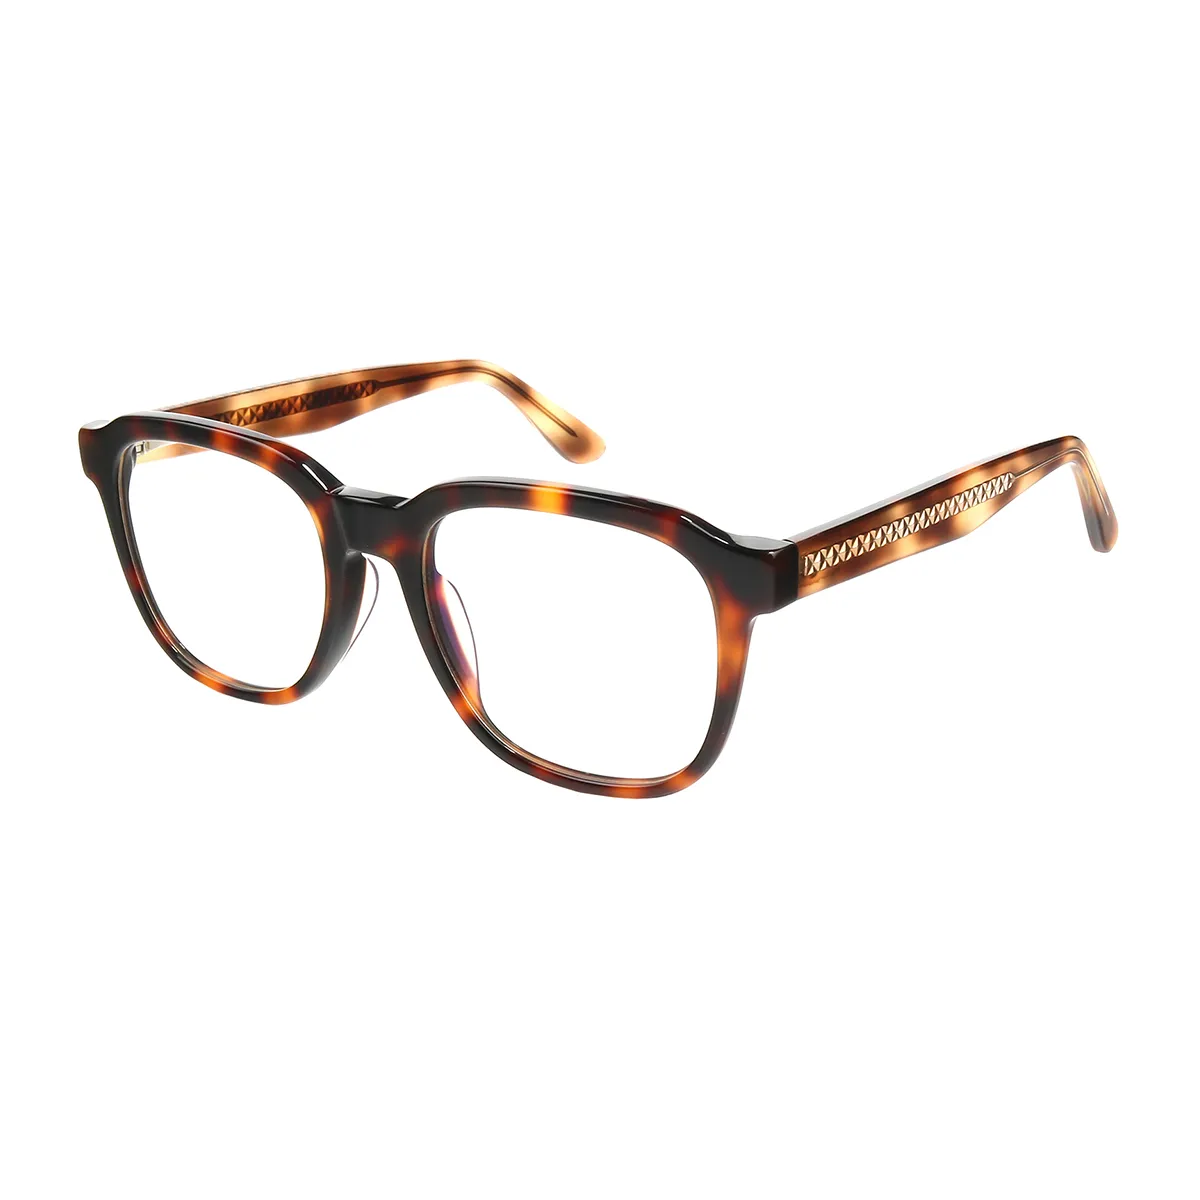 Knox - Square  Glasses for Men